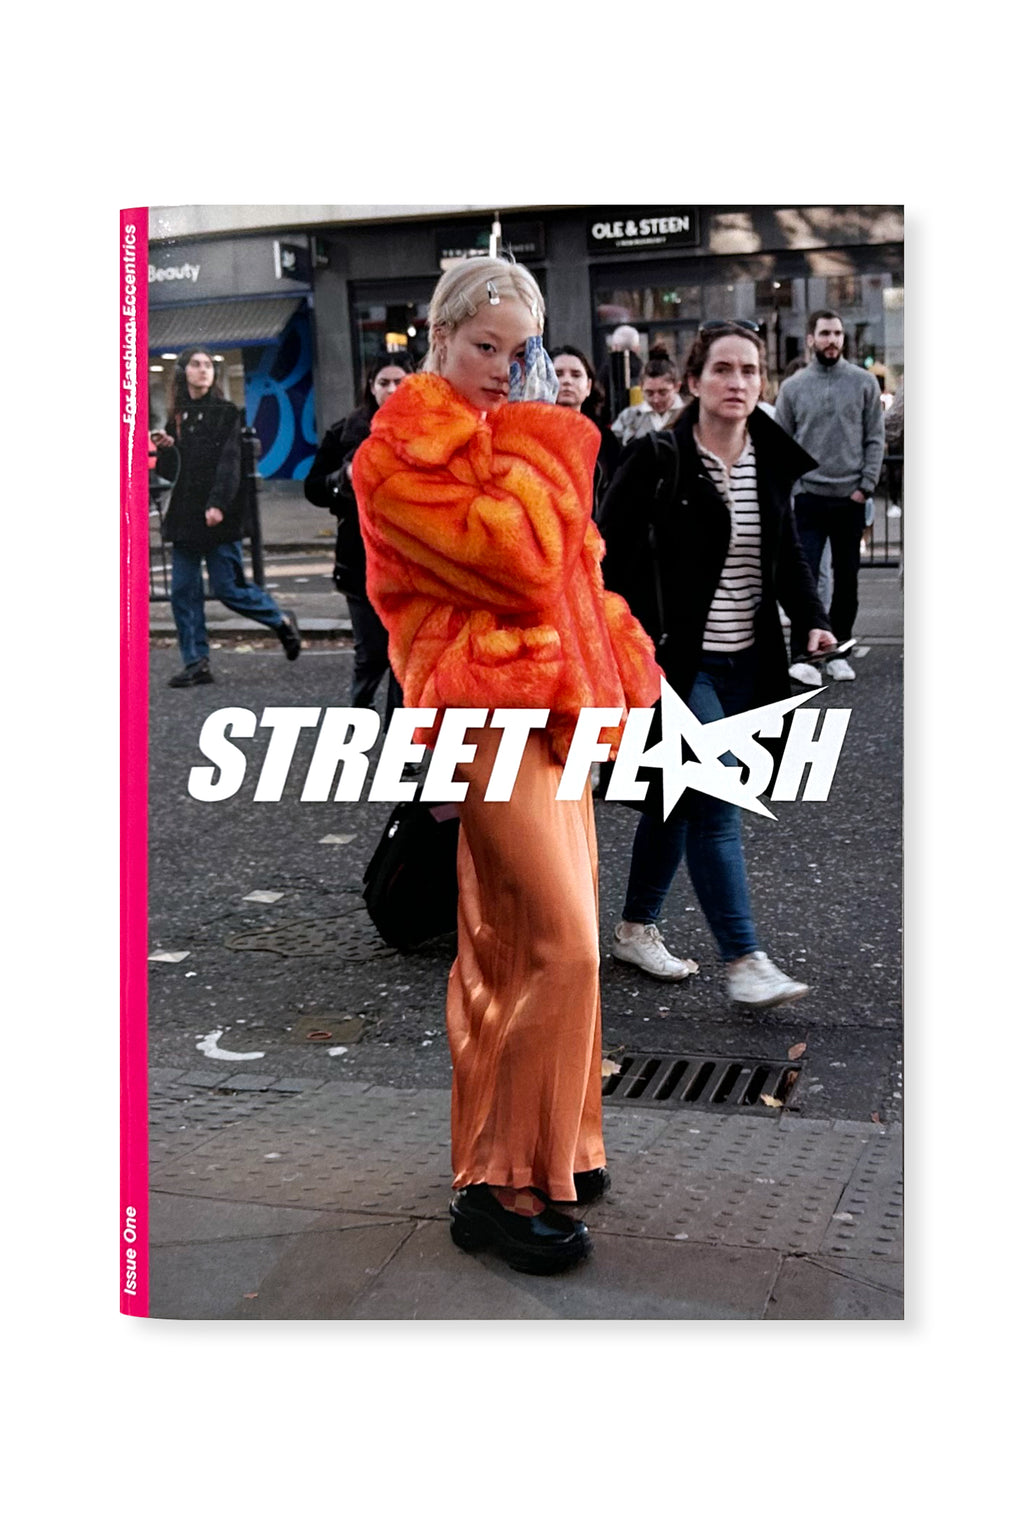 Street Flash, Issue 1